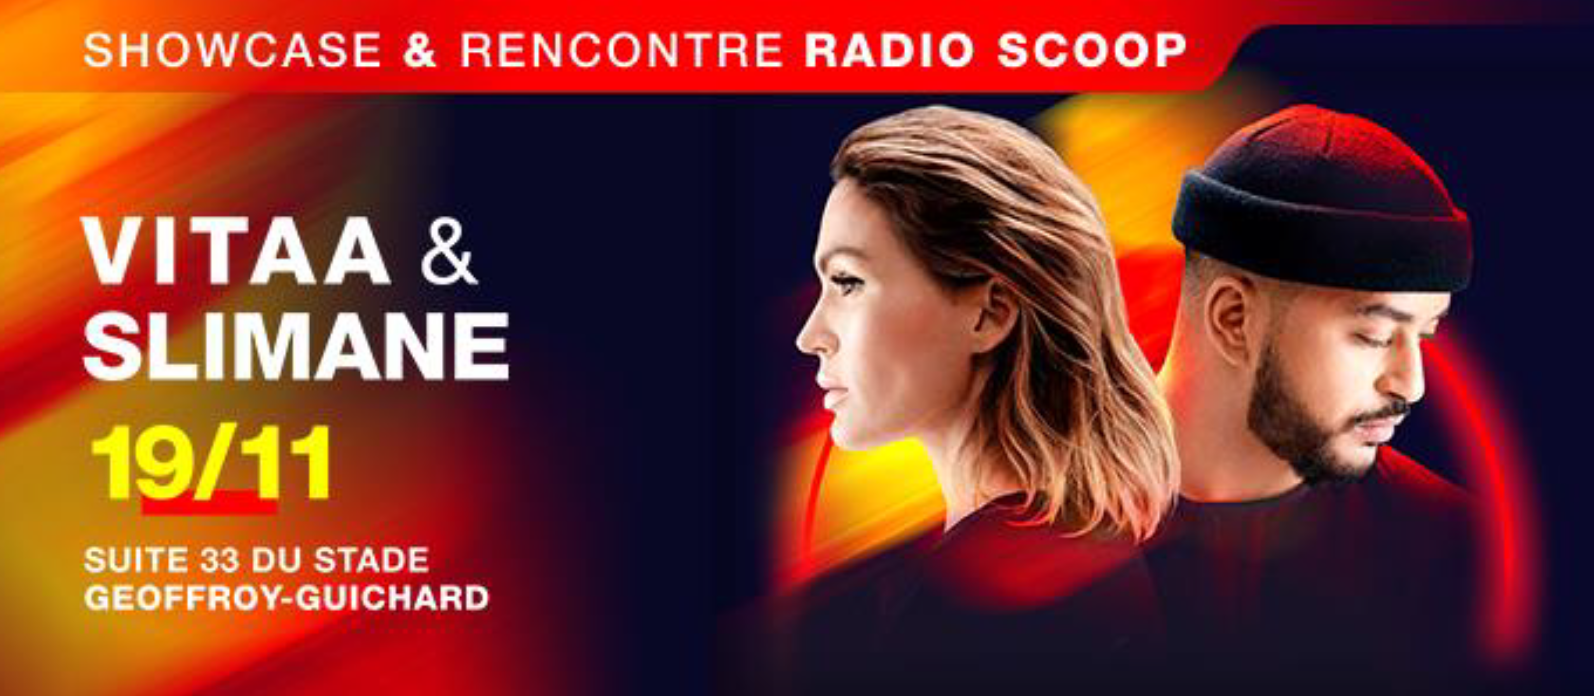 Radio Scoop reçoit Vitaa et Slimane à Saint-Étienne